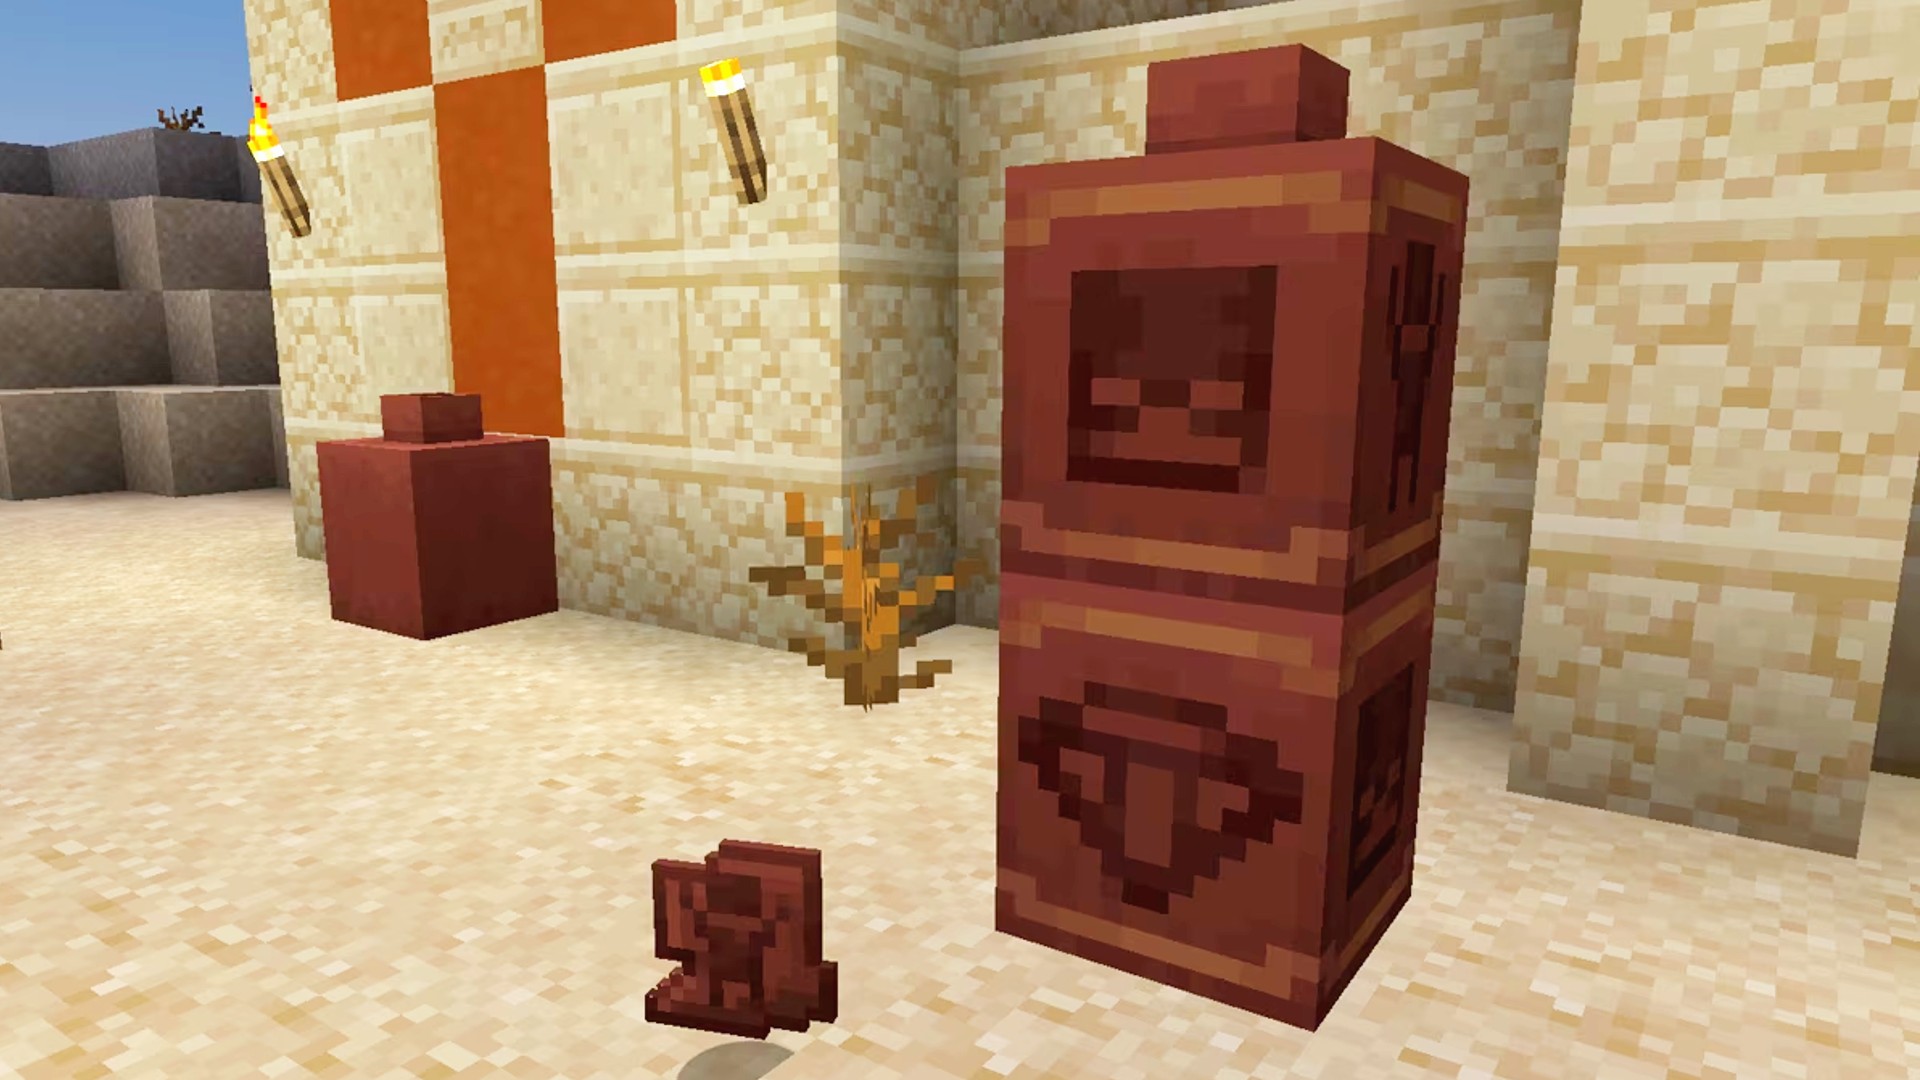 Minecraft archeology, pottery sherds, and decorative blocks